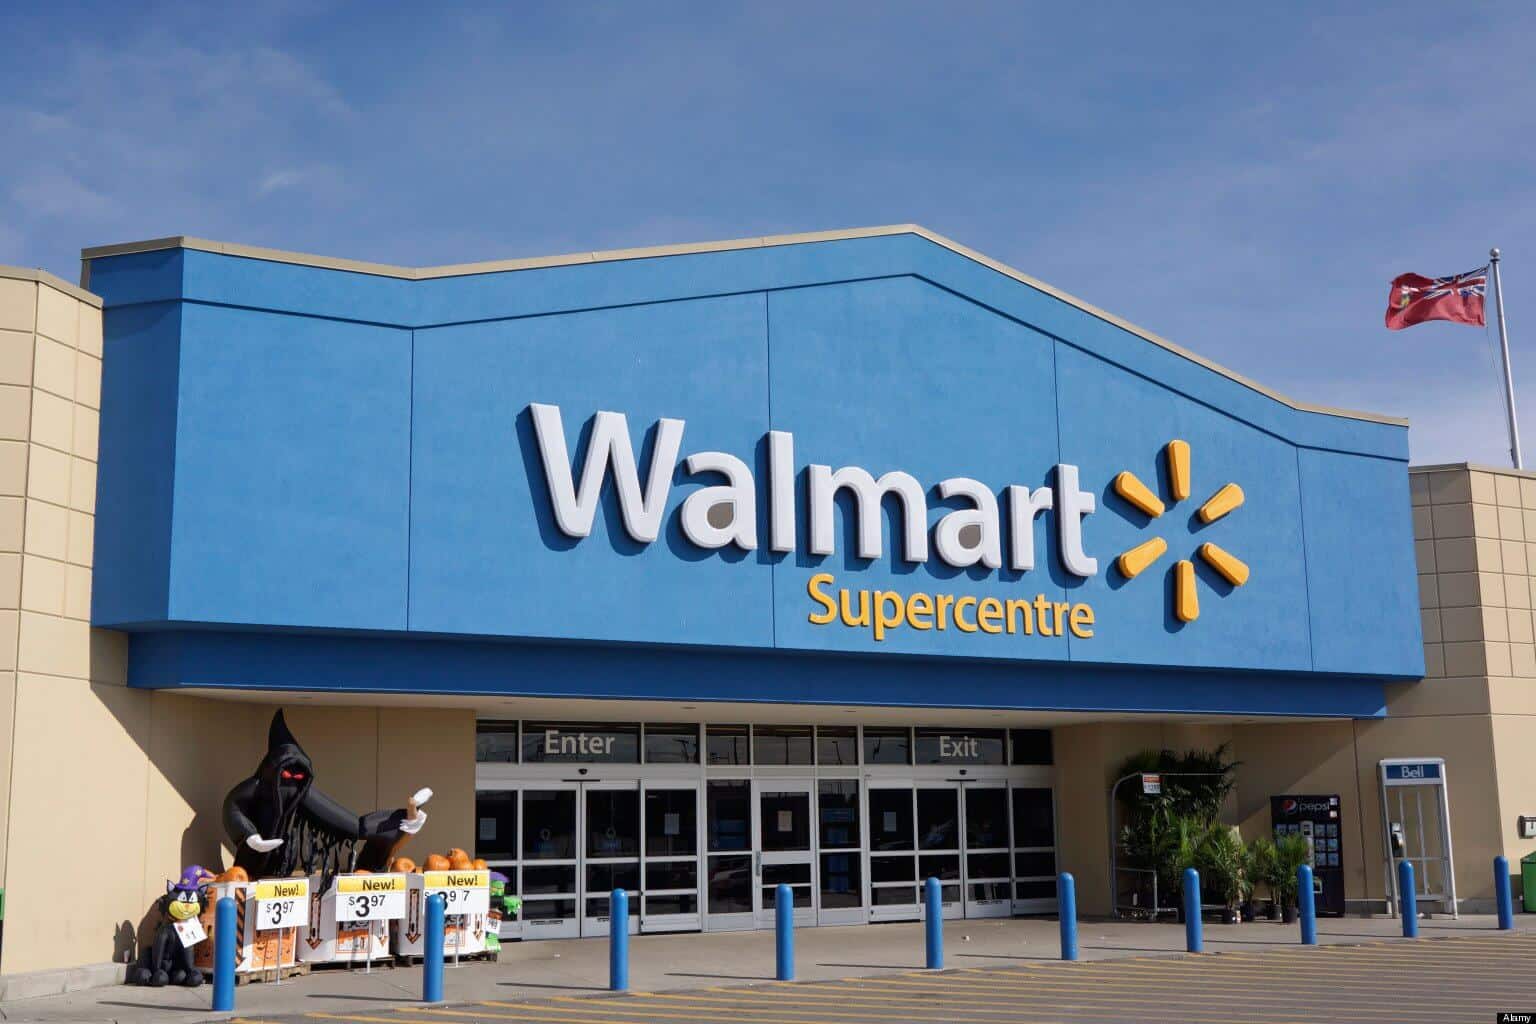 Wal-Mart Stores, Inc. (WMT)